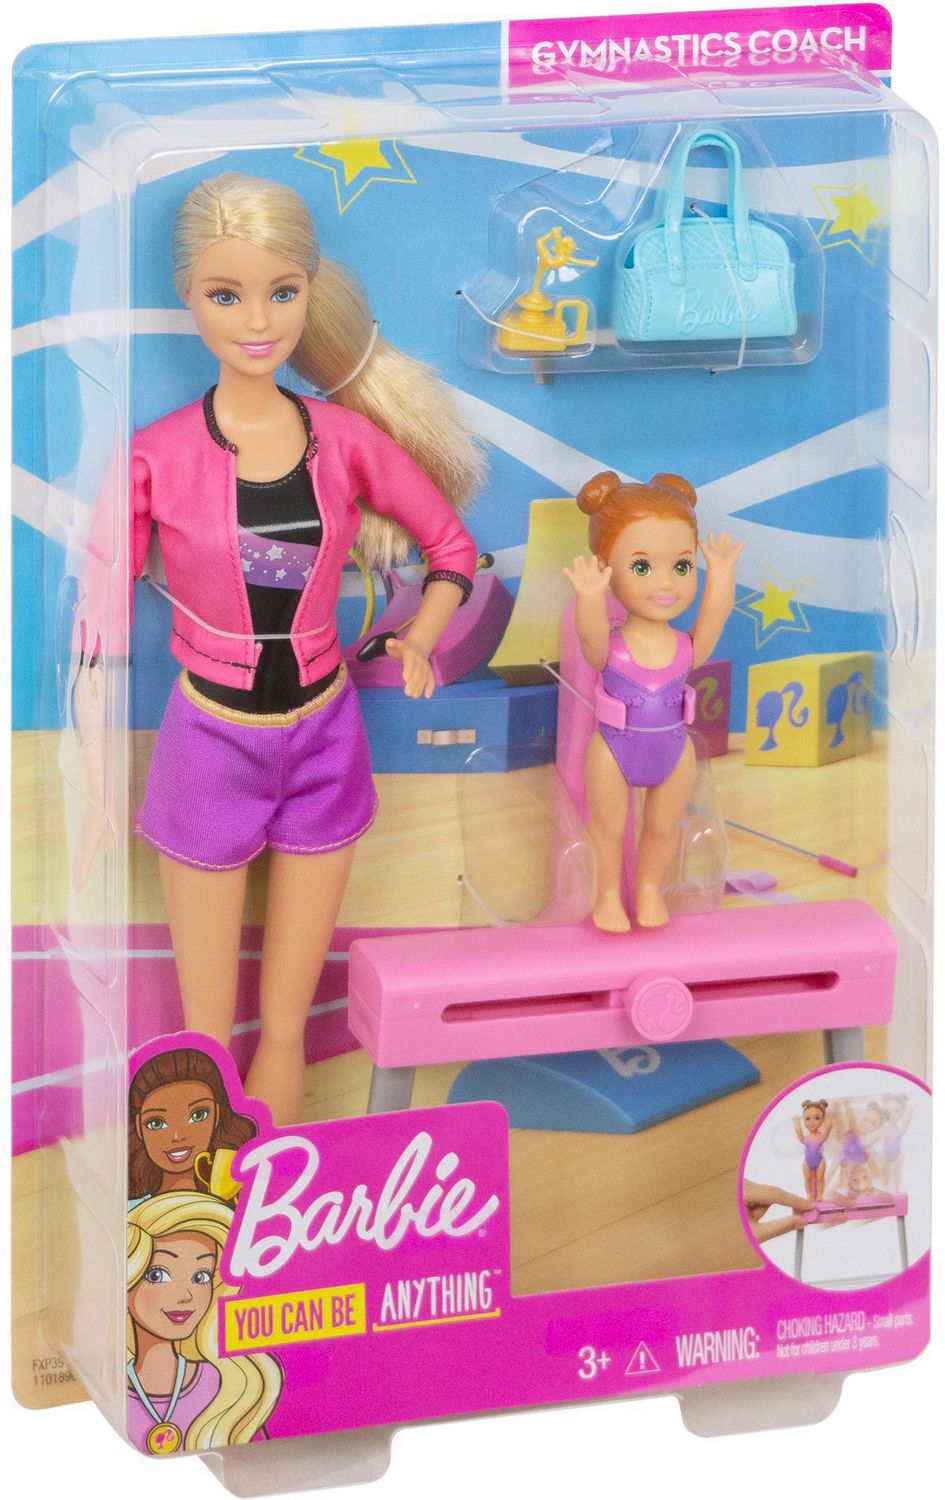 Details about  / Barbie Gymnastics Coach Dolls /& Playset